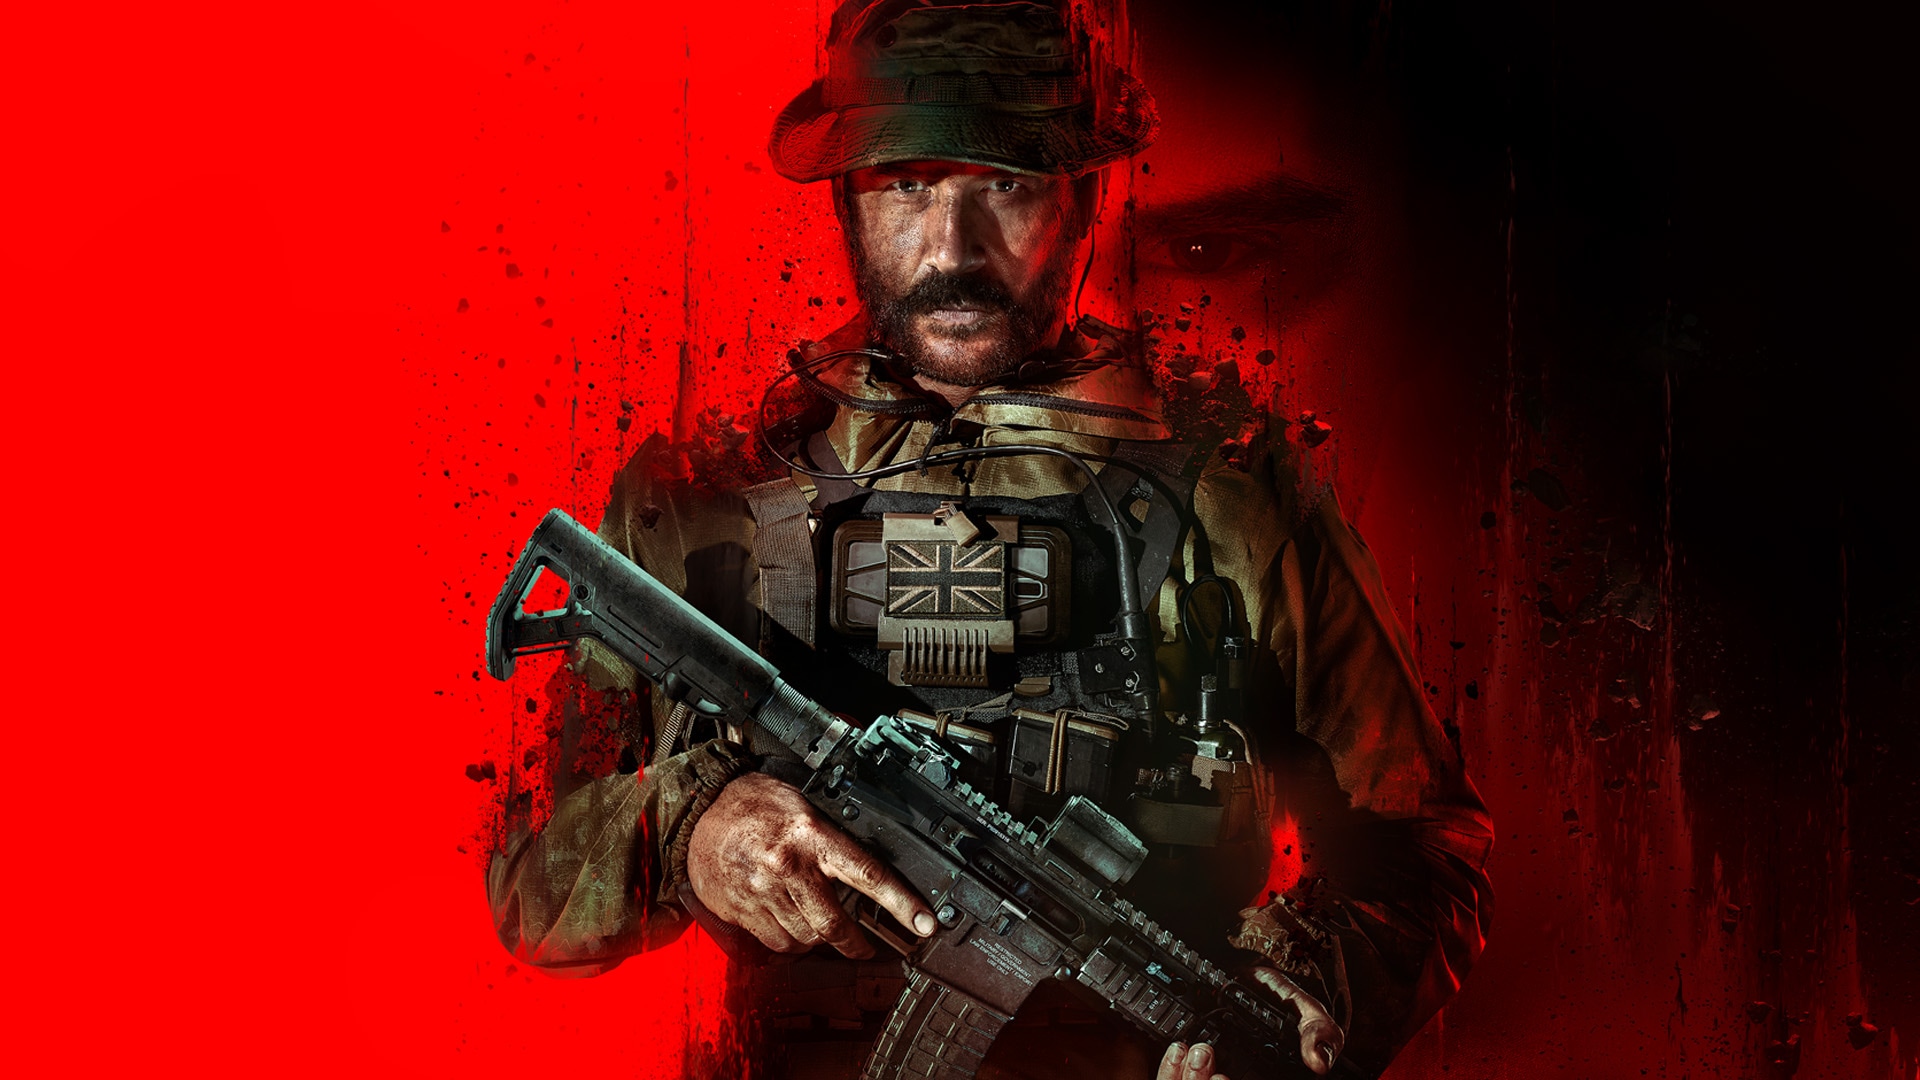 Call of Duty®: Modern Warfare® III - Multiplayer Free Access - Call of Duty